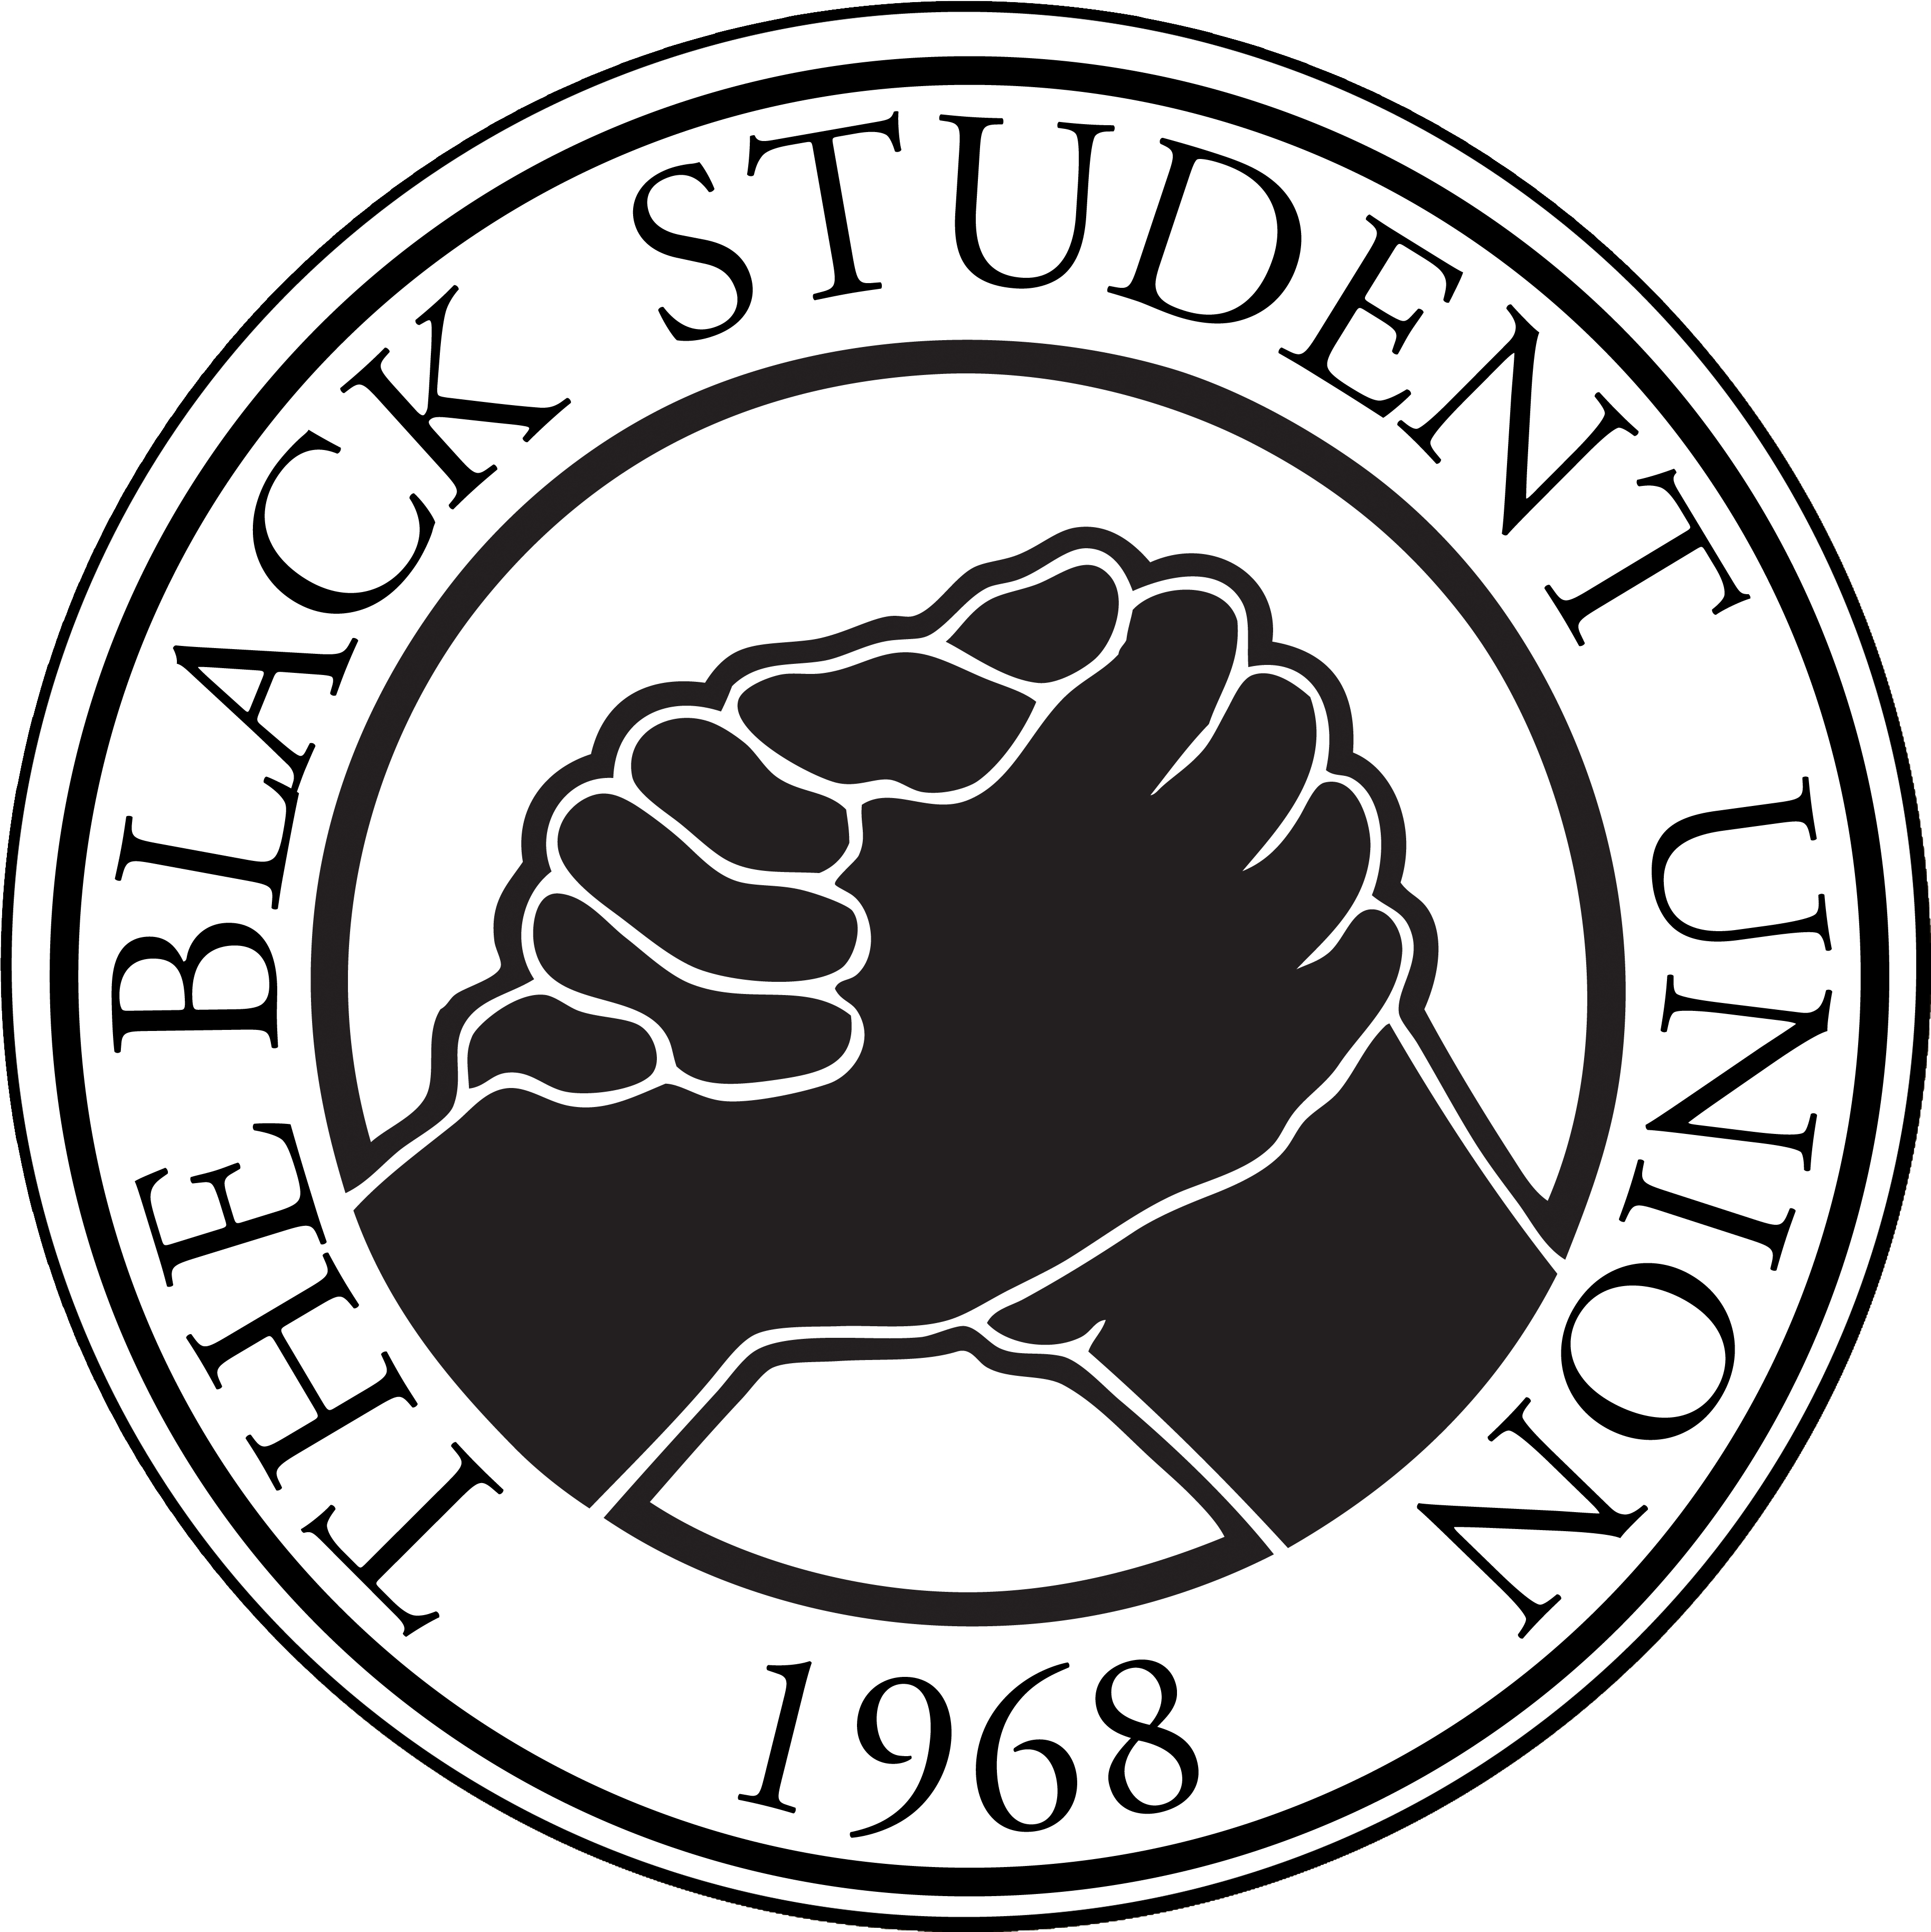 Download - Black Student Union Fsu (3900x3900)